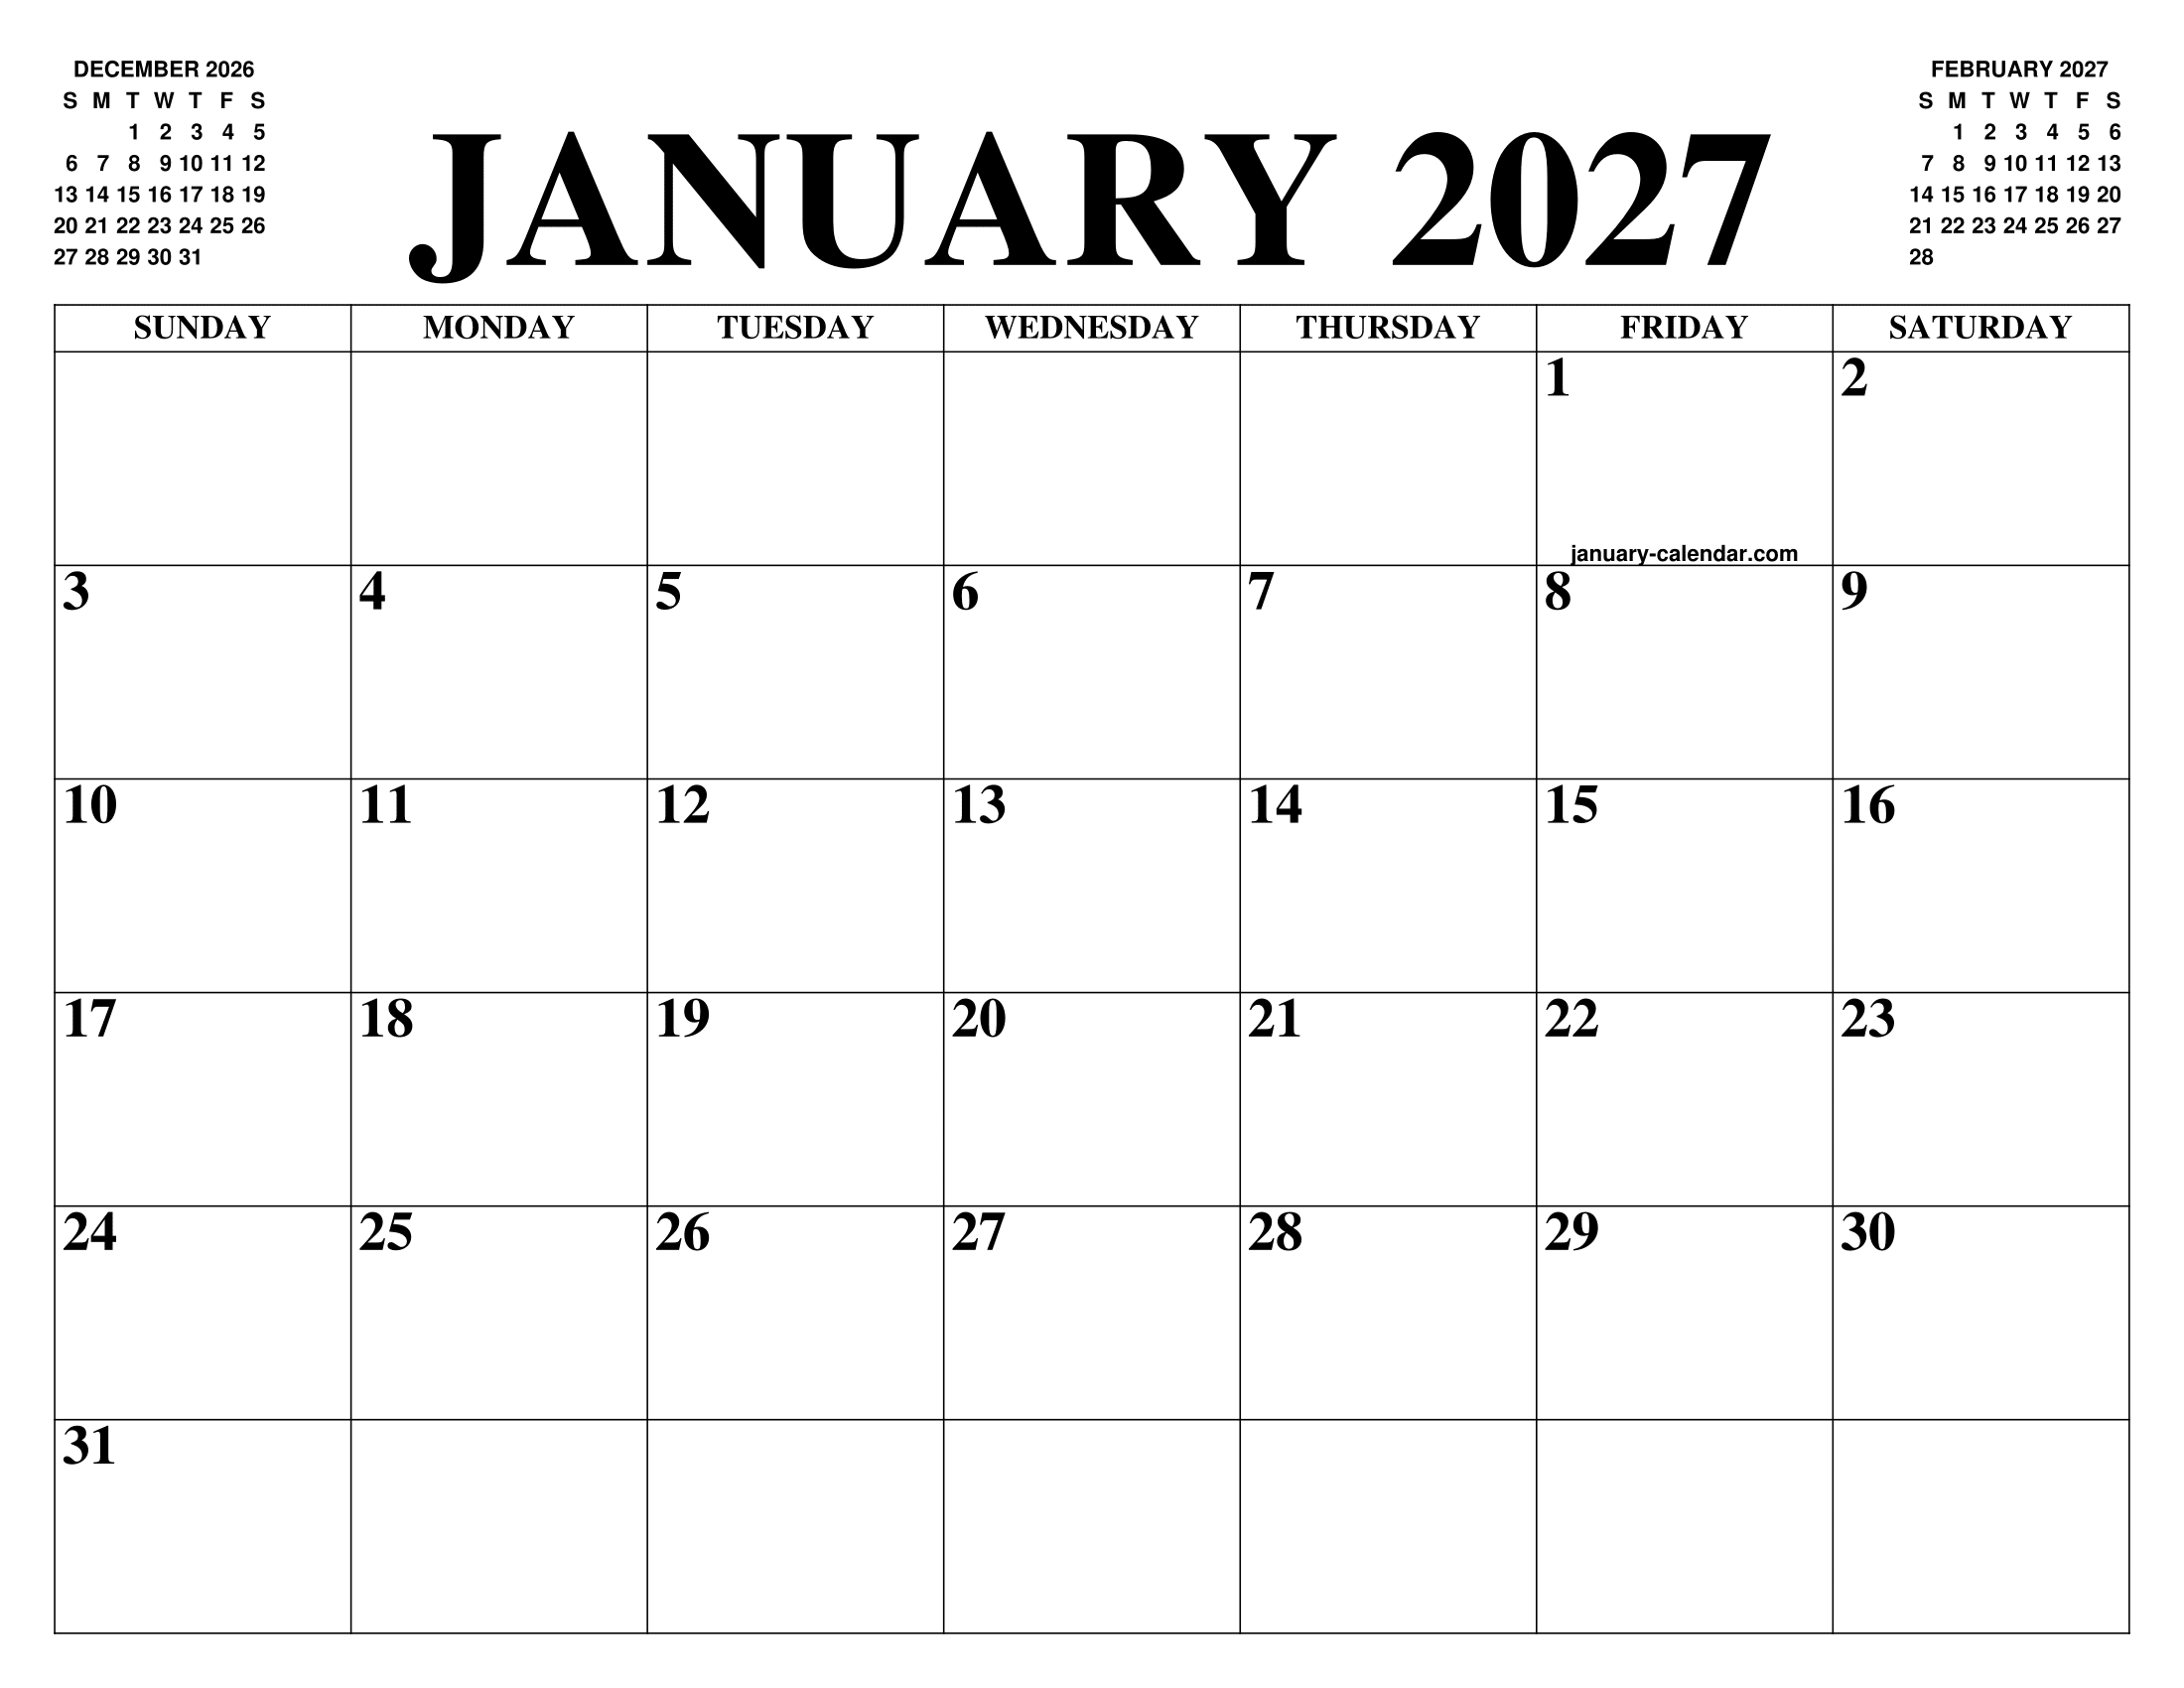 JANUARY 2027 CALENDAR OF THE MONTH: FREE PRINTABLE JANUARY CALENDAR OF